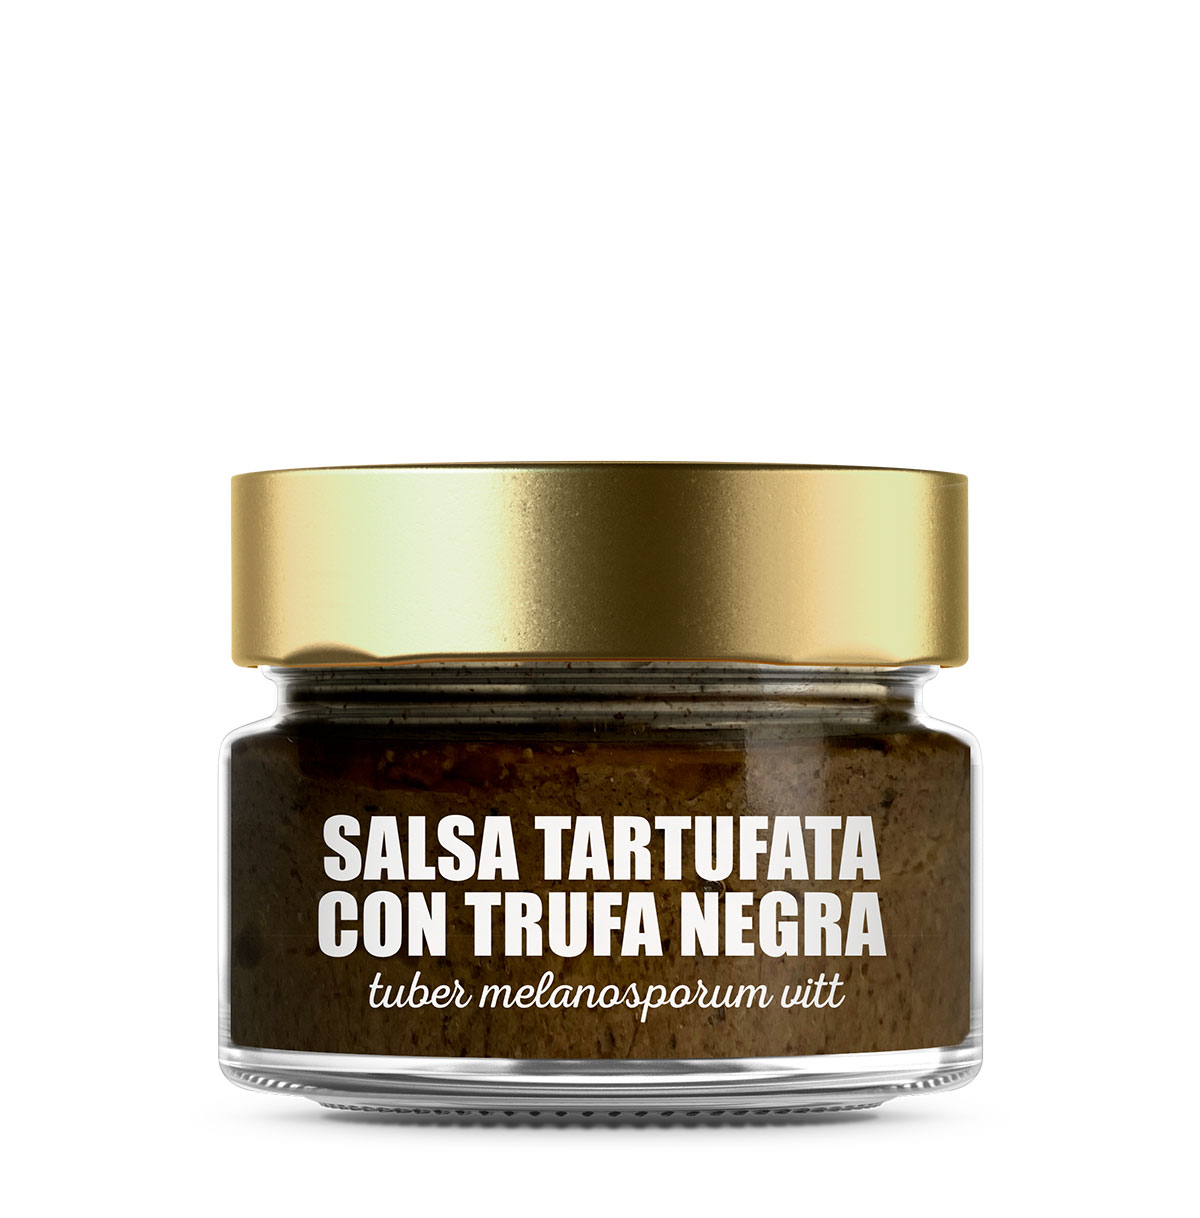 Salsa tartufata con trufa negra tuber melanosporum vitt